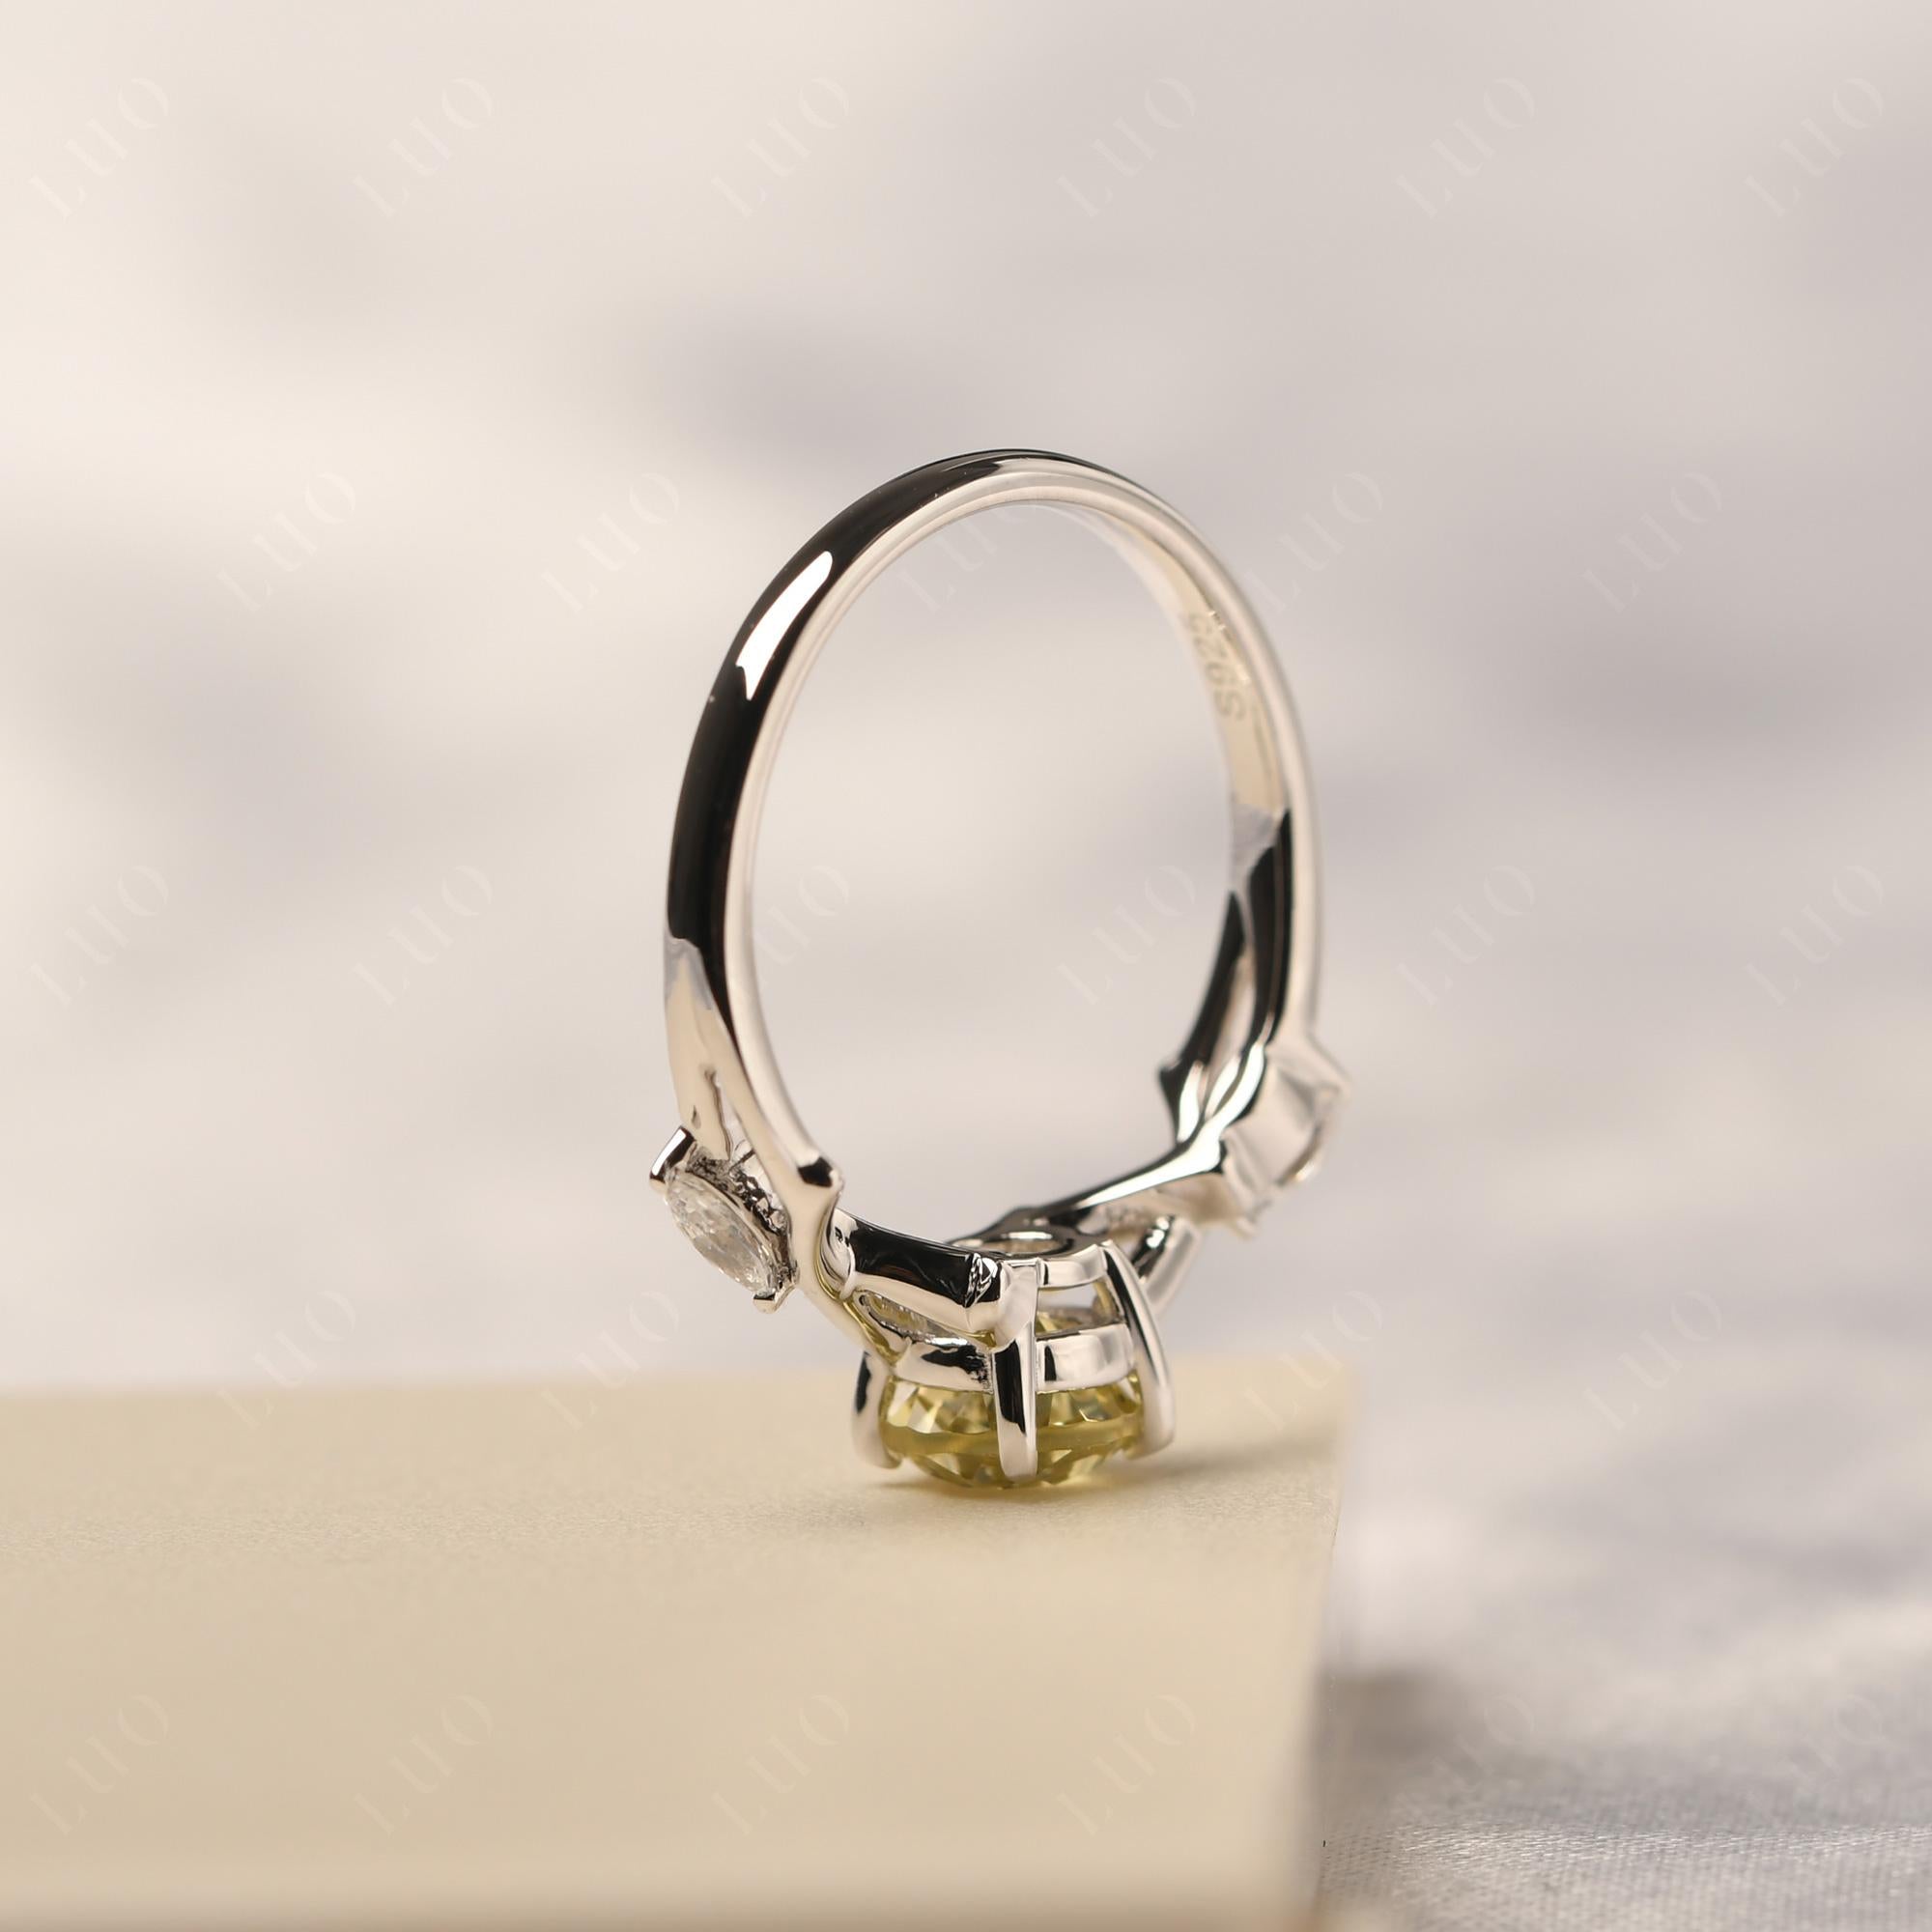 Twig Lemon Quartz Engagement Ring - LUO Jewelry